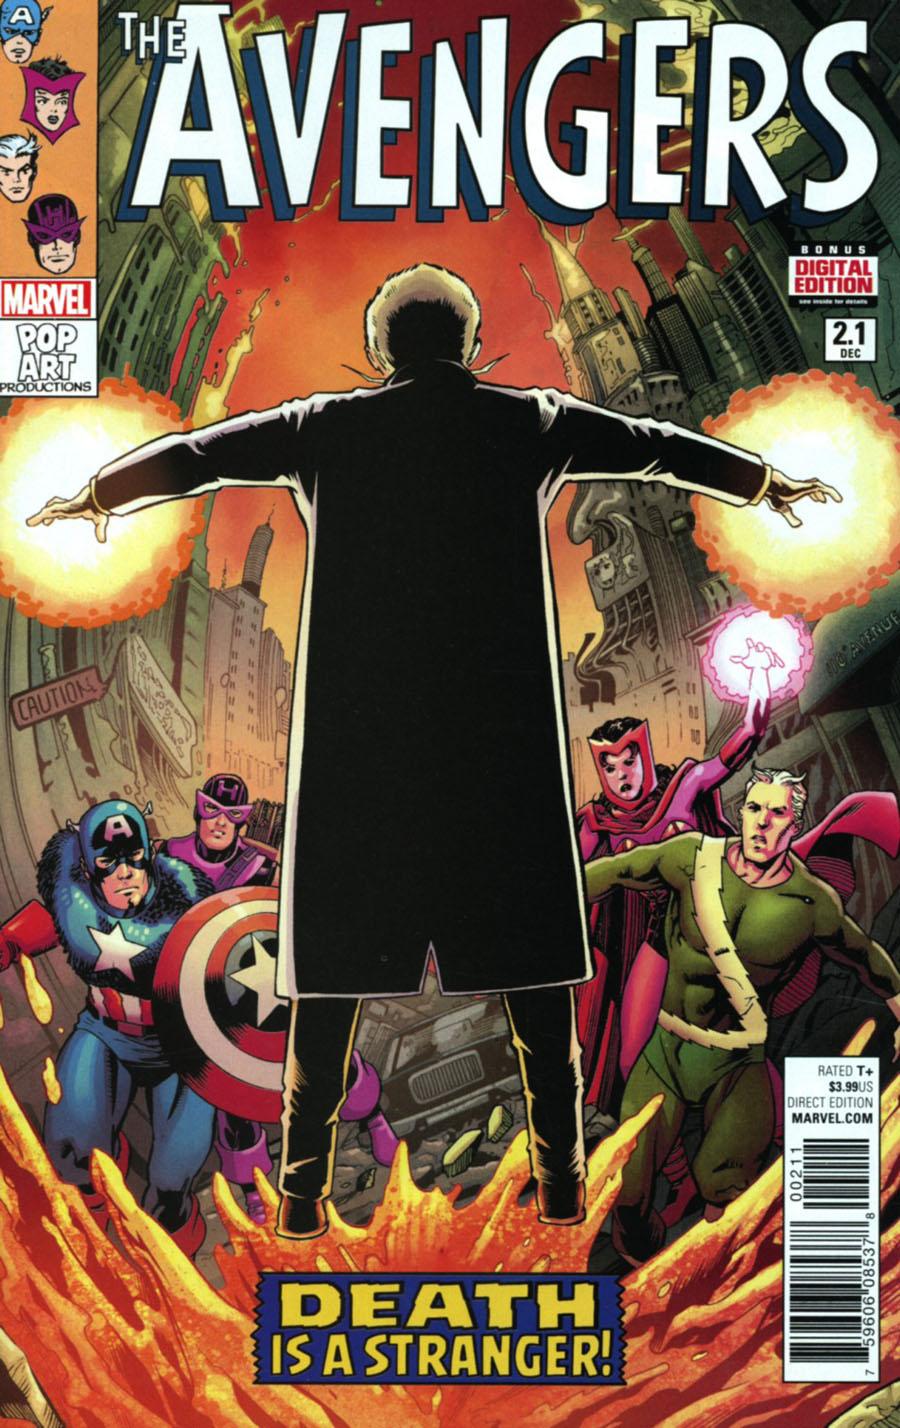 The Avengers Vol. 6 #2.1